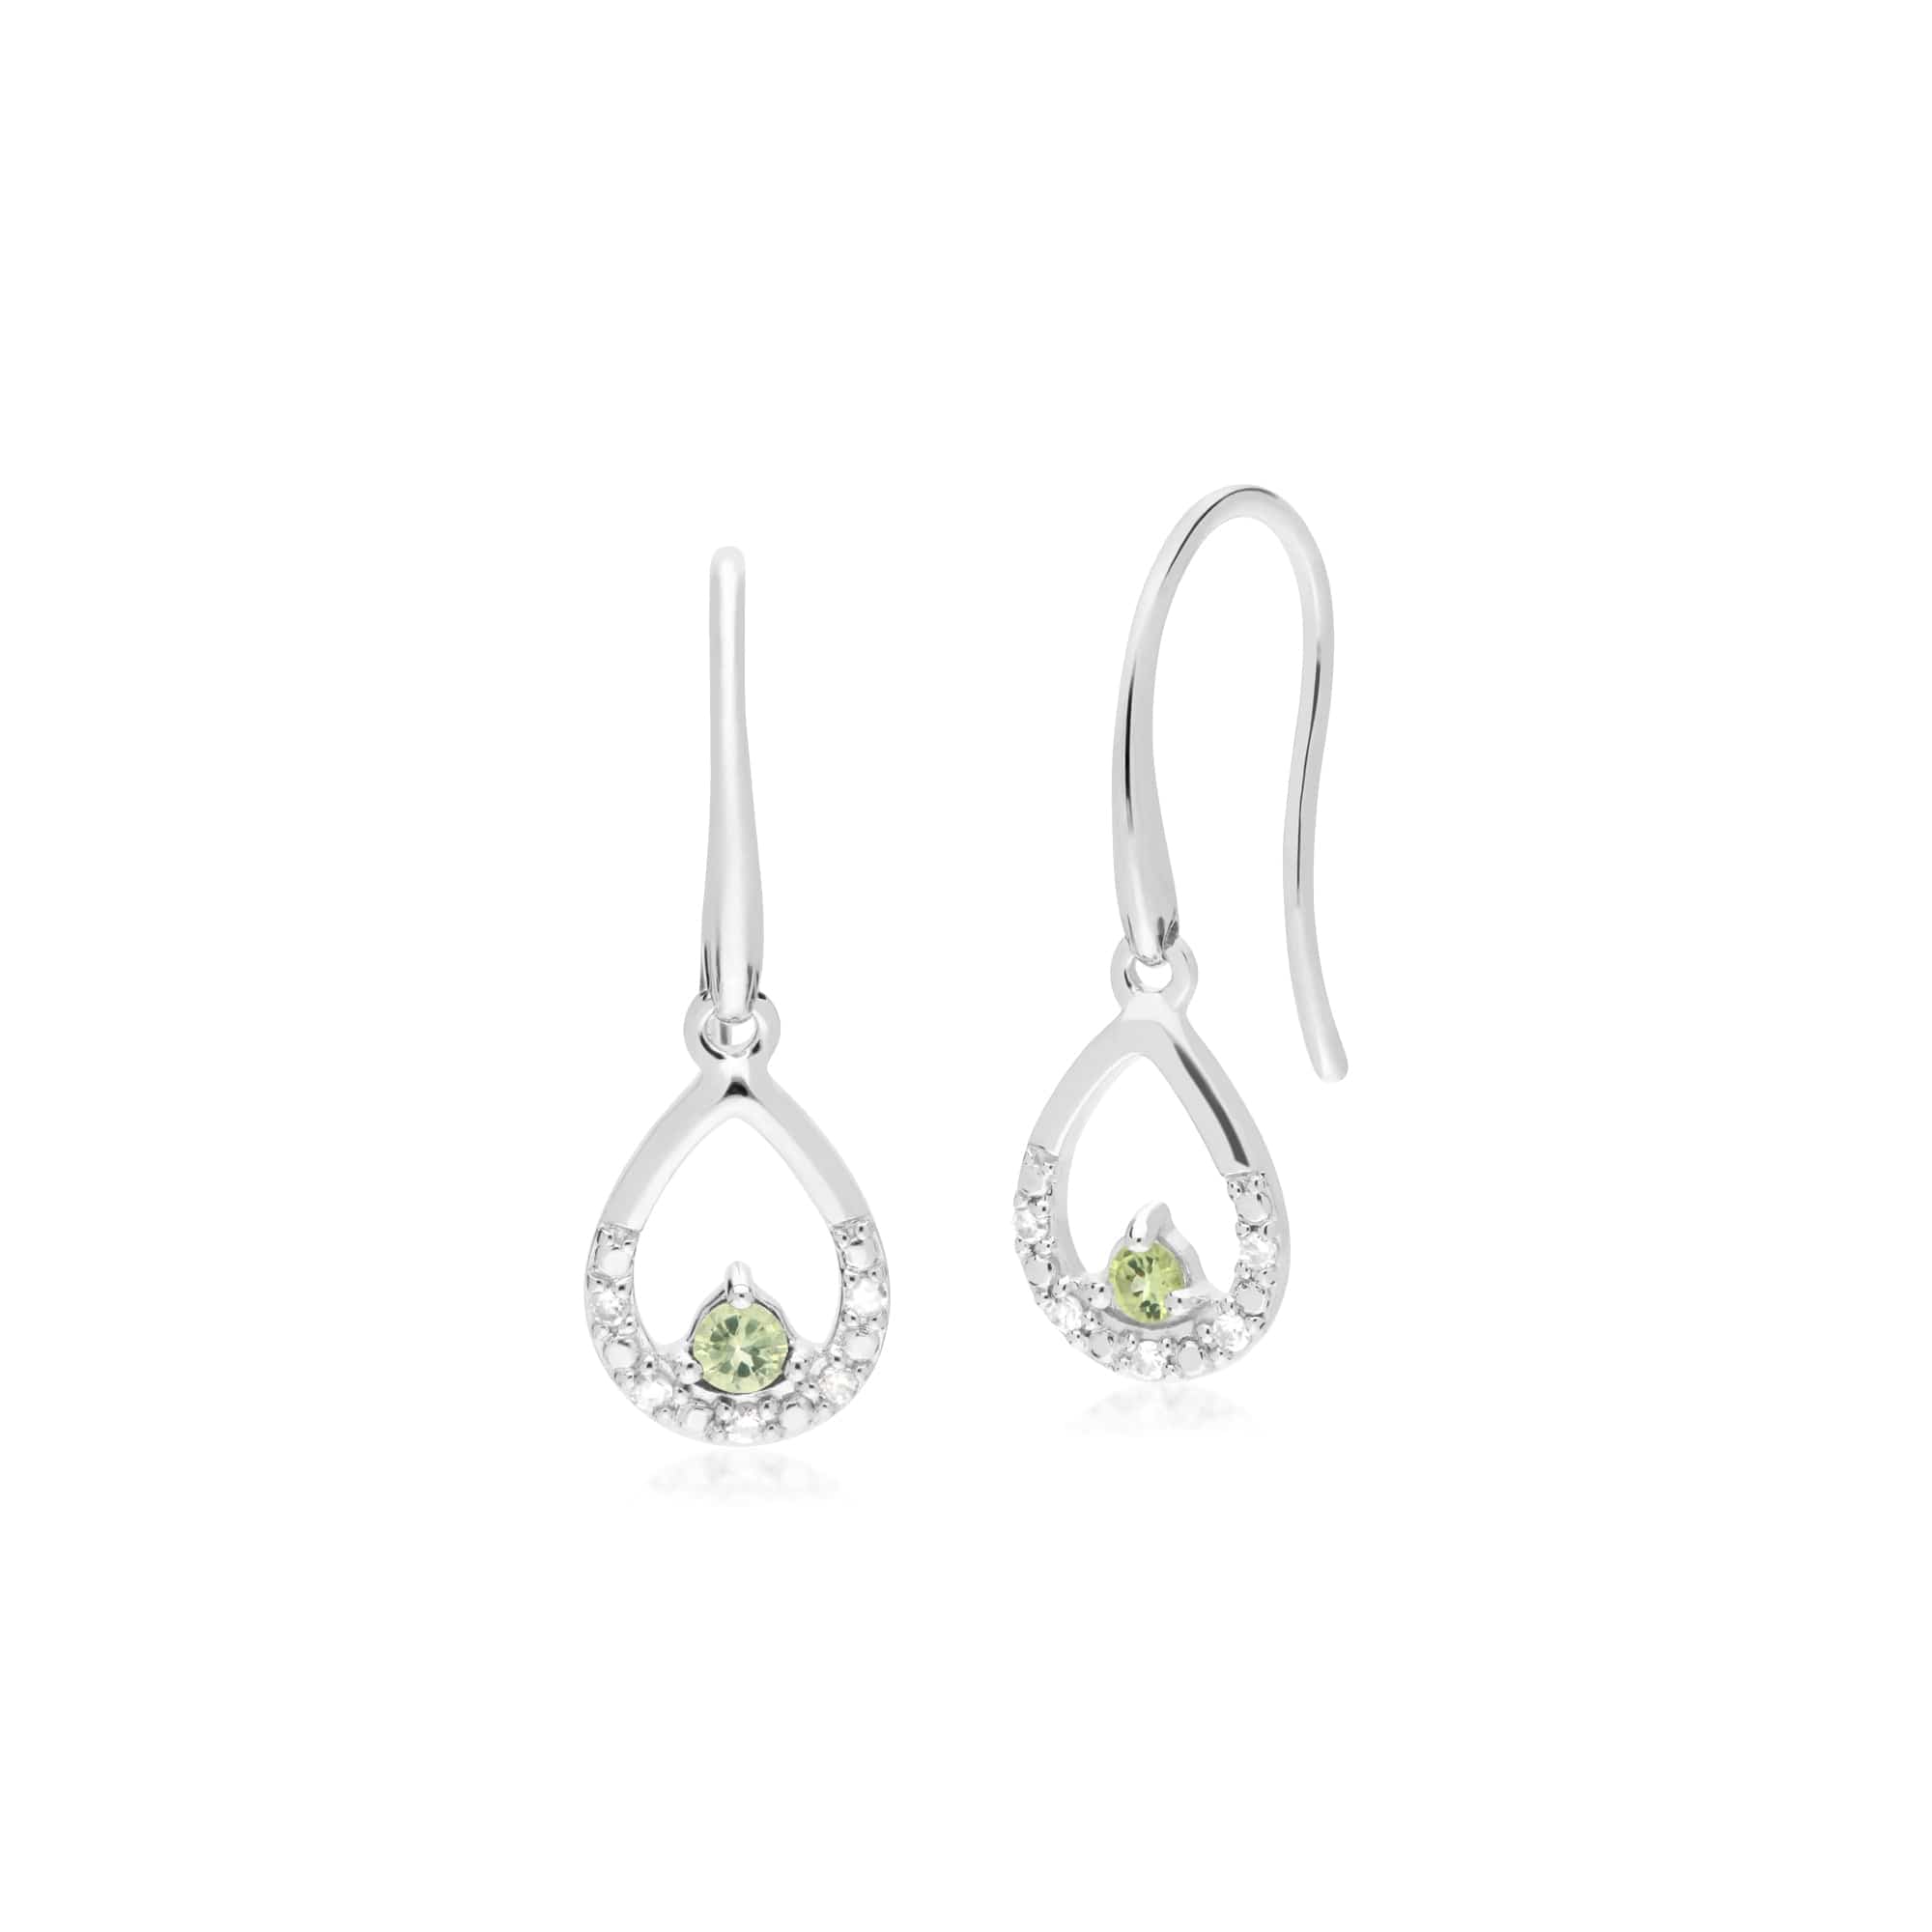 162E0259089-162P0220089 Classic Round Peridot & Diamond Tear Drop Earrings & Pendant Set in 9ct White Gold 2